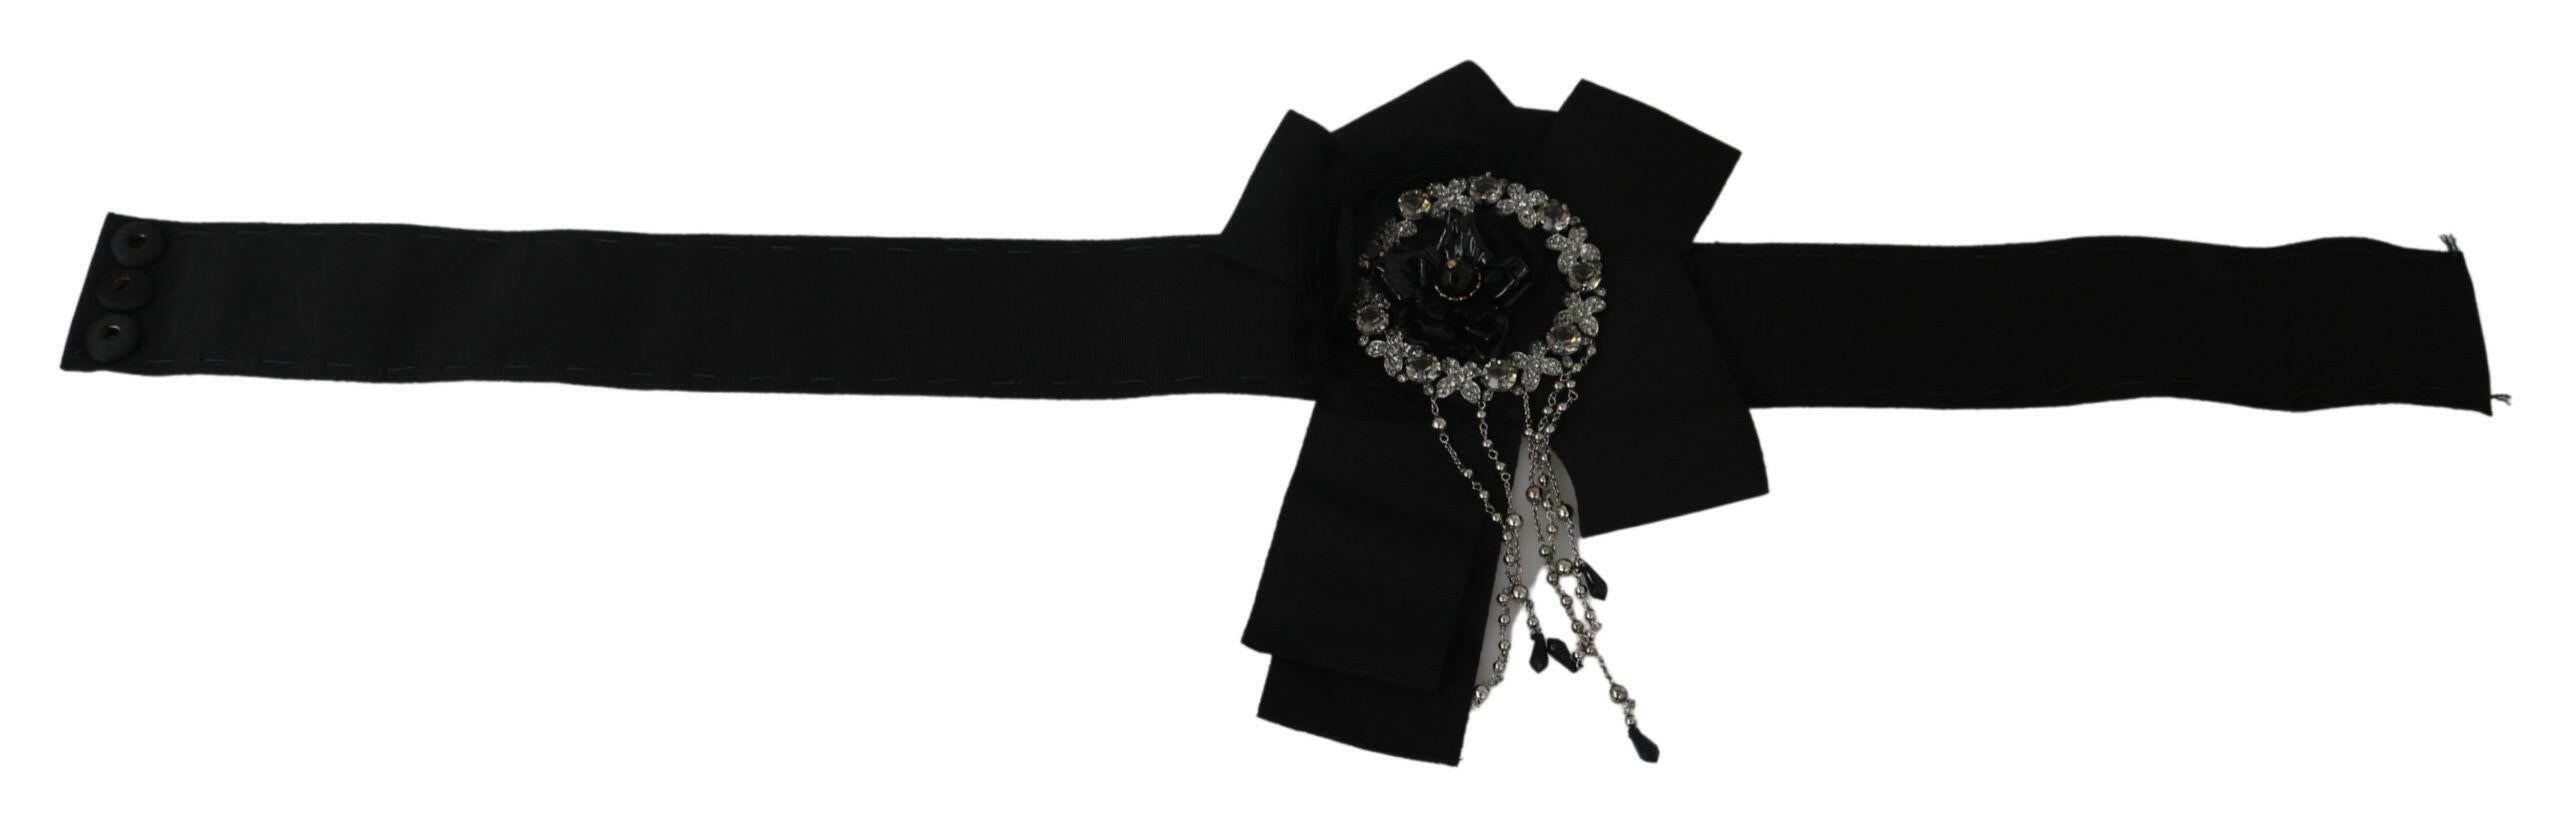 Dolce & Gabbana Black Crystal Brooch Wide Wai SATORIA Belt - GENUINE AUTHENTIC BRAND LLC  